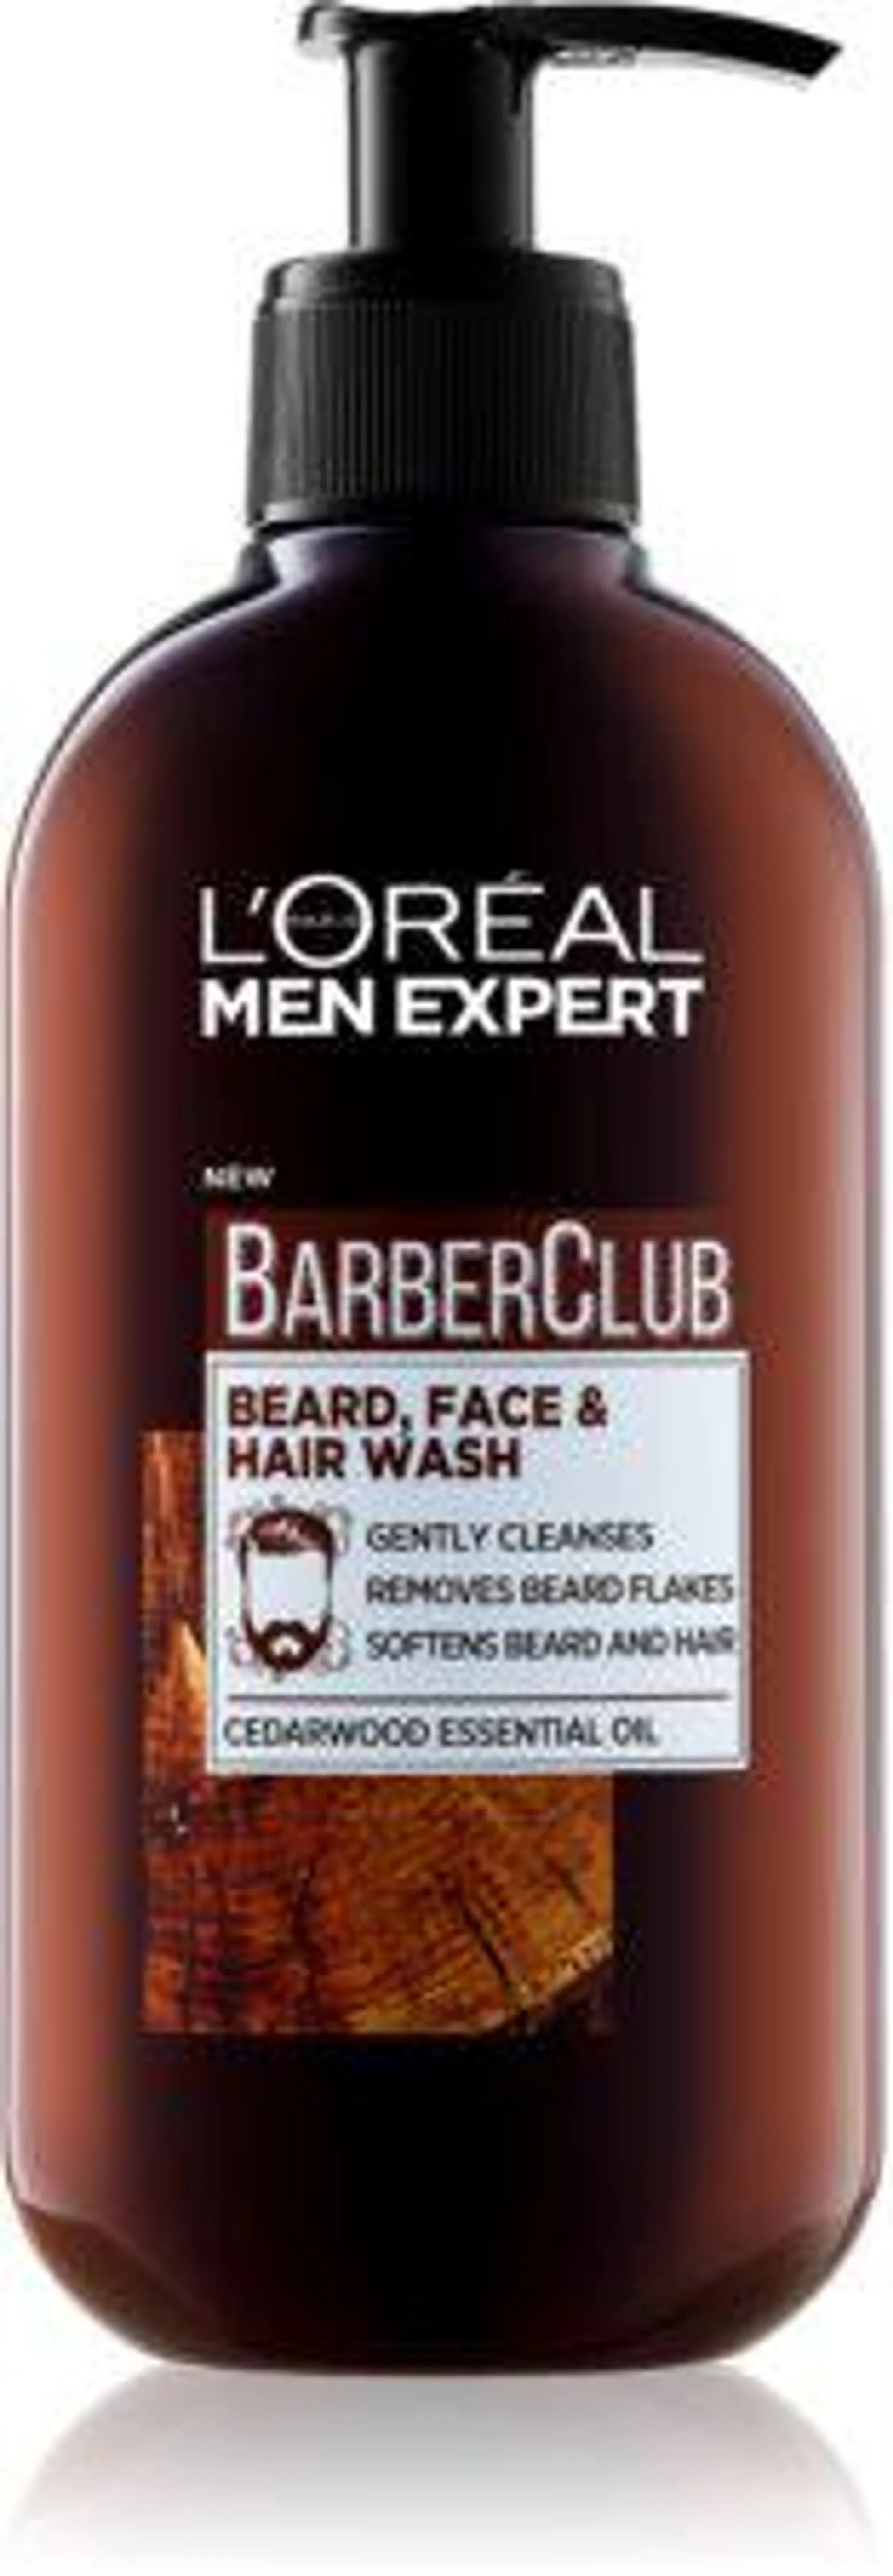 Men Expert Barber Club